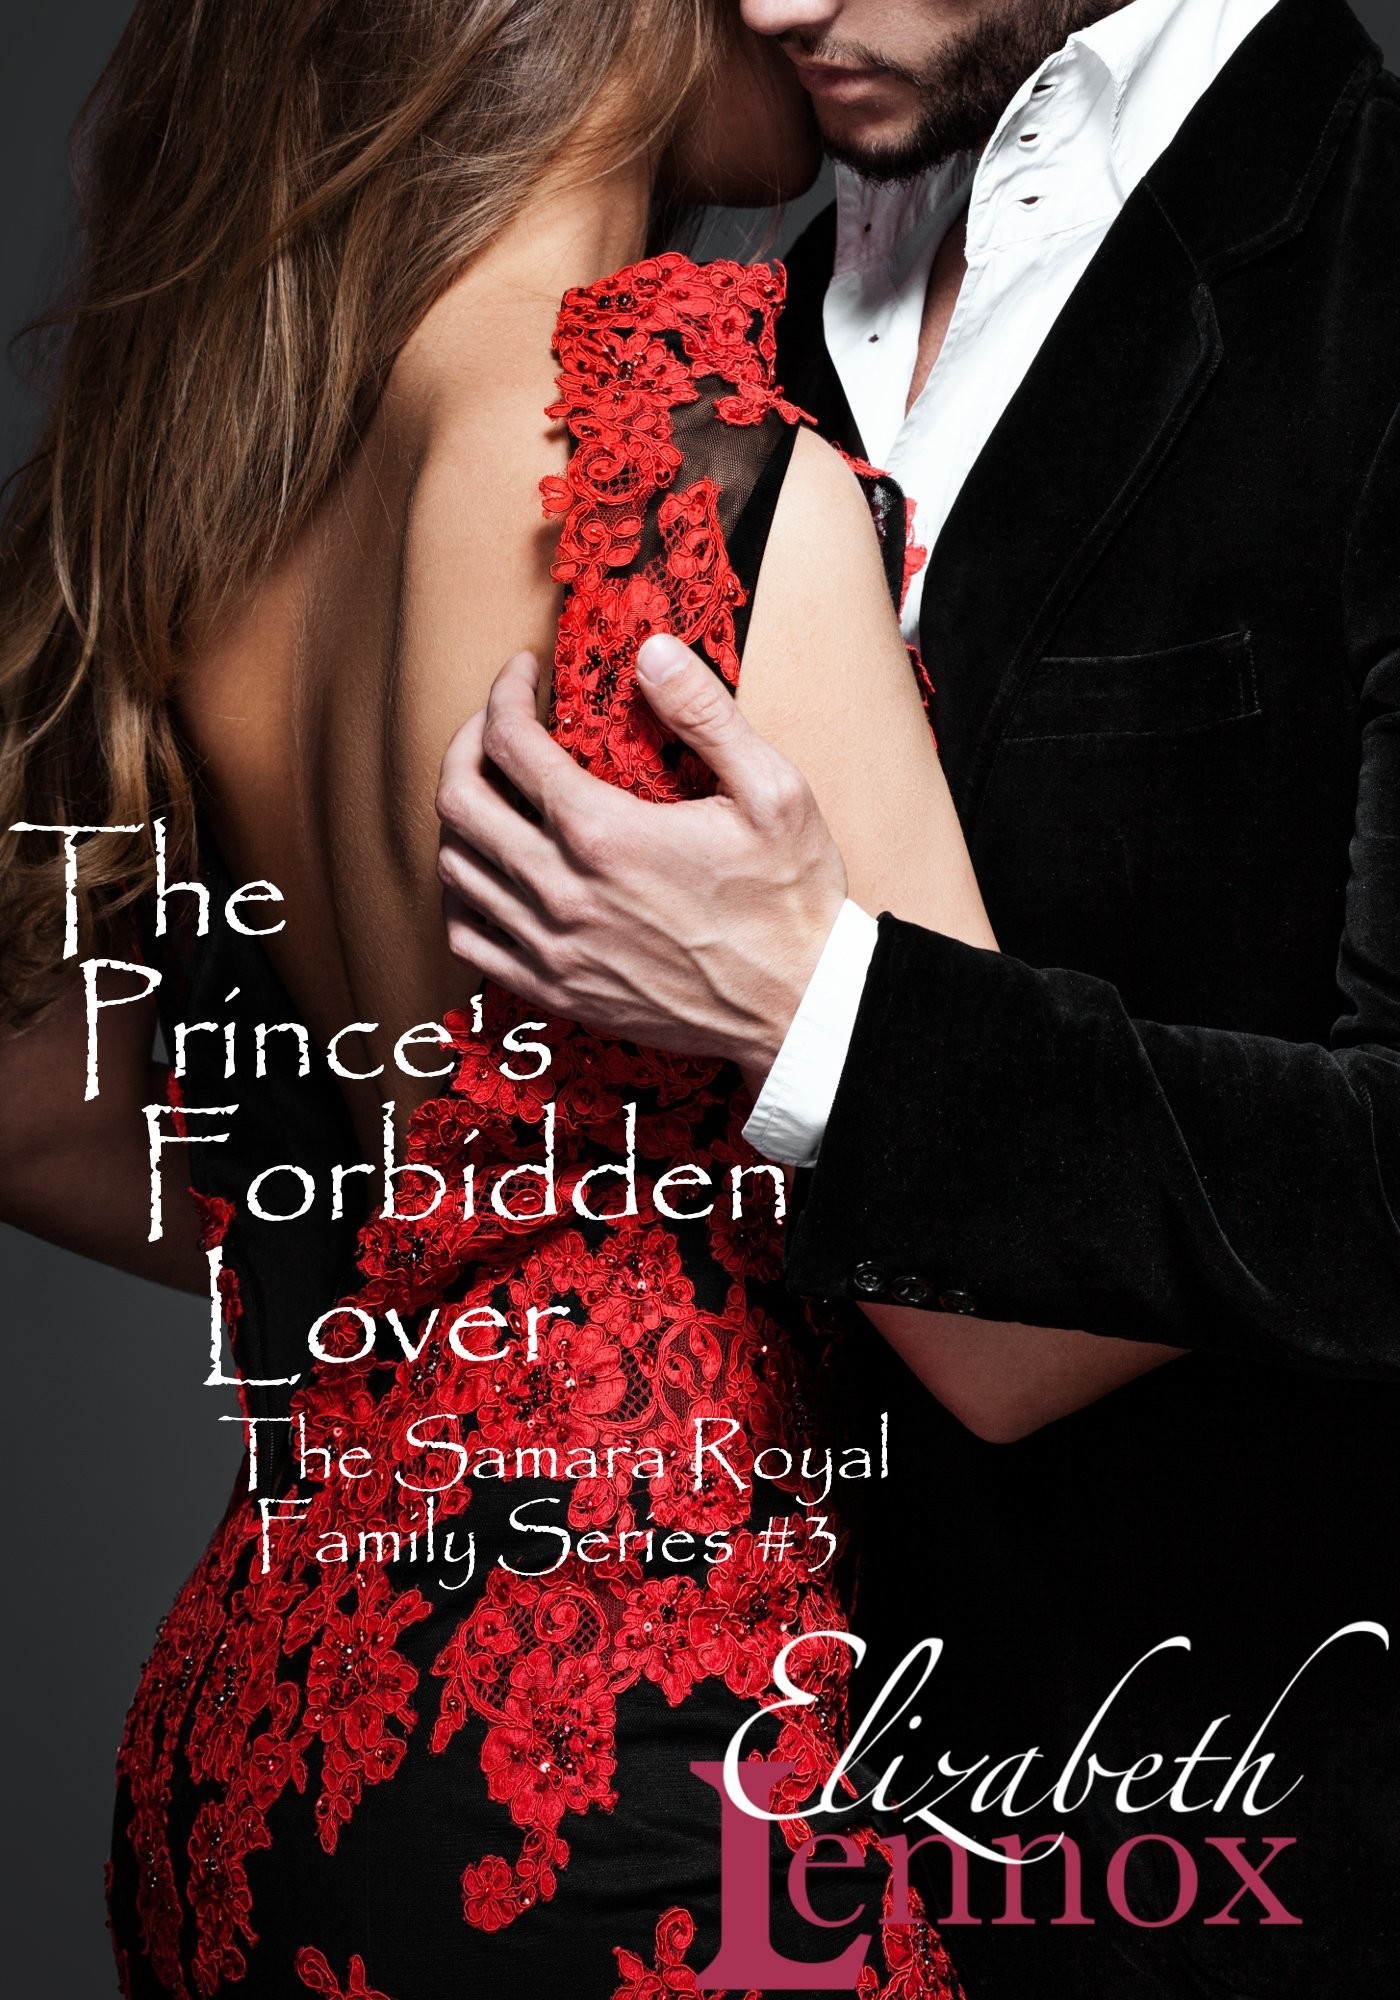 The Prince's Forbidden Lover (The Samara Royal Family #3) by Elizabeth Lennox